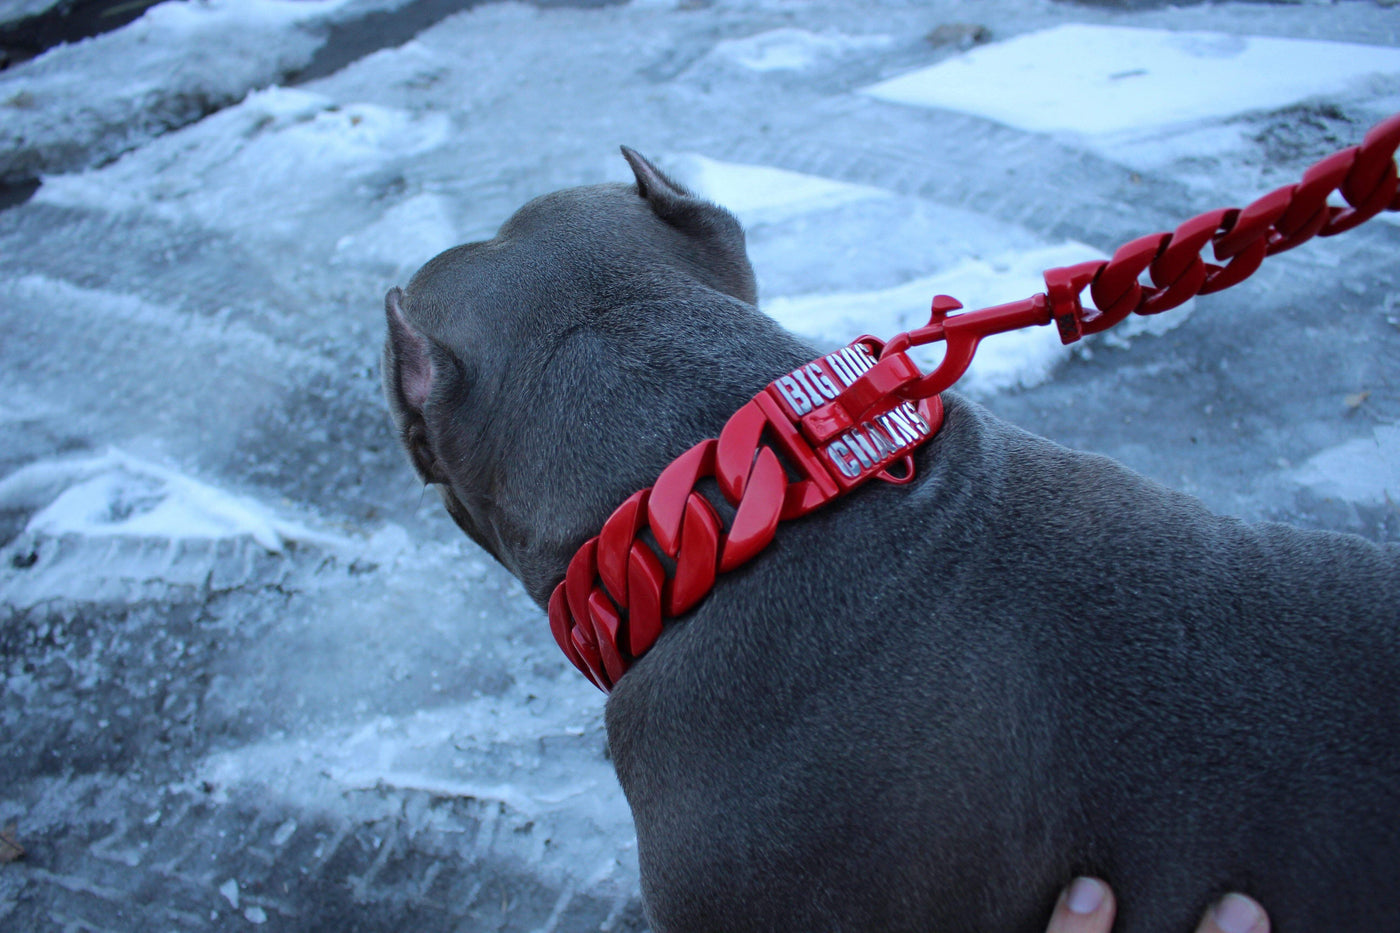 Pocket Bully | The Diablo Dog Collar and Leash | Red Dog Collar and leash Combo | Big Dog Chains